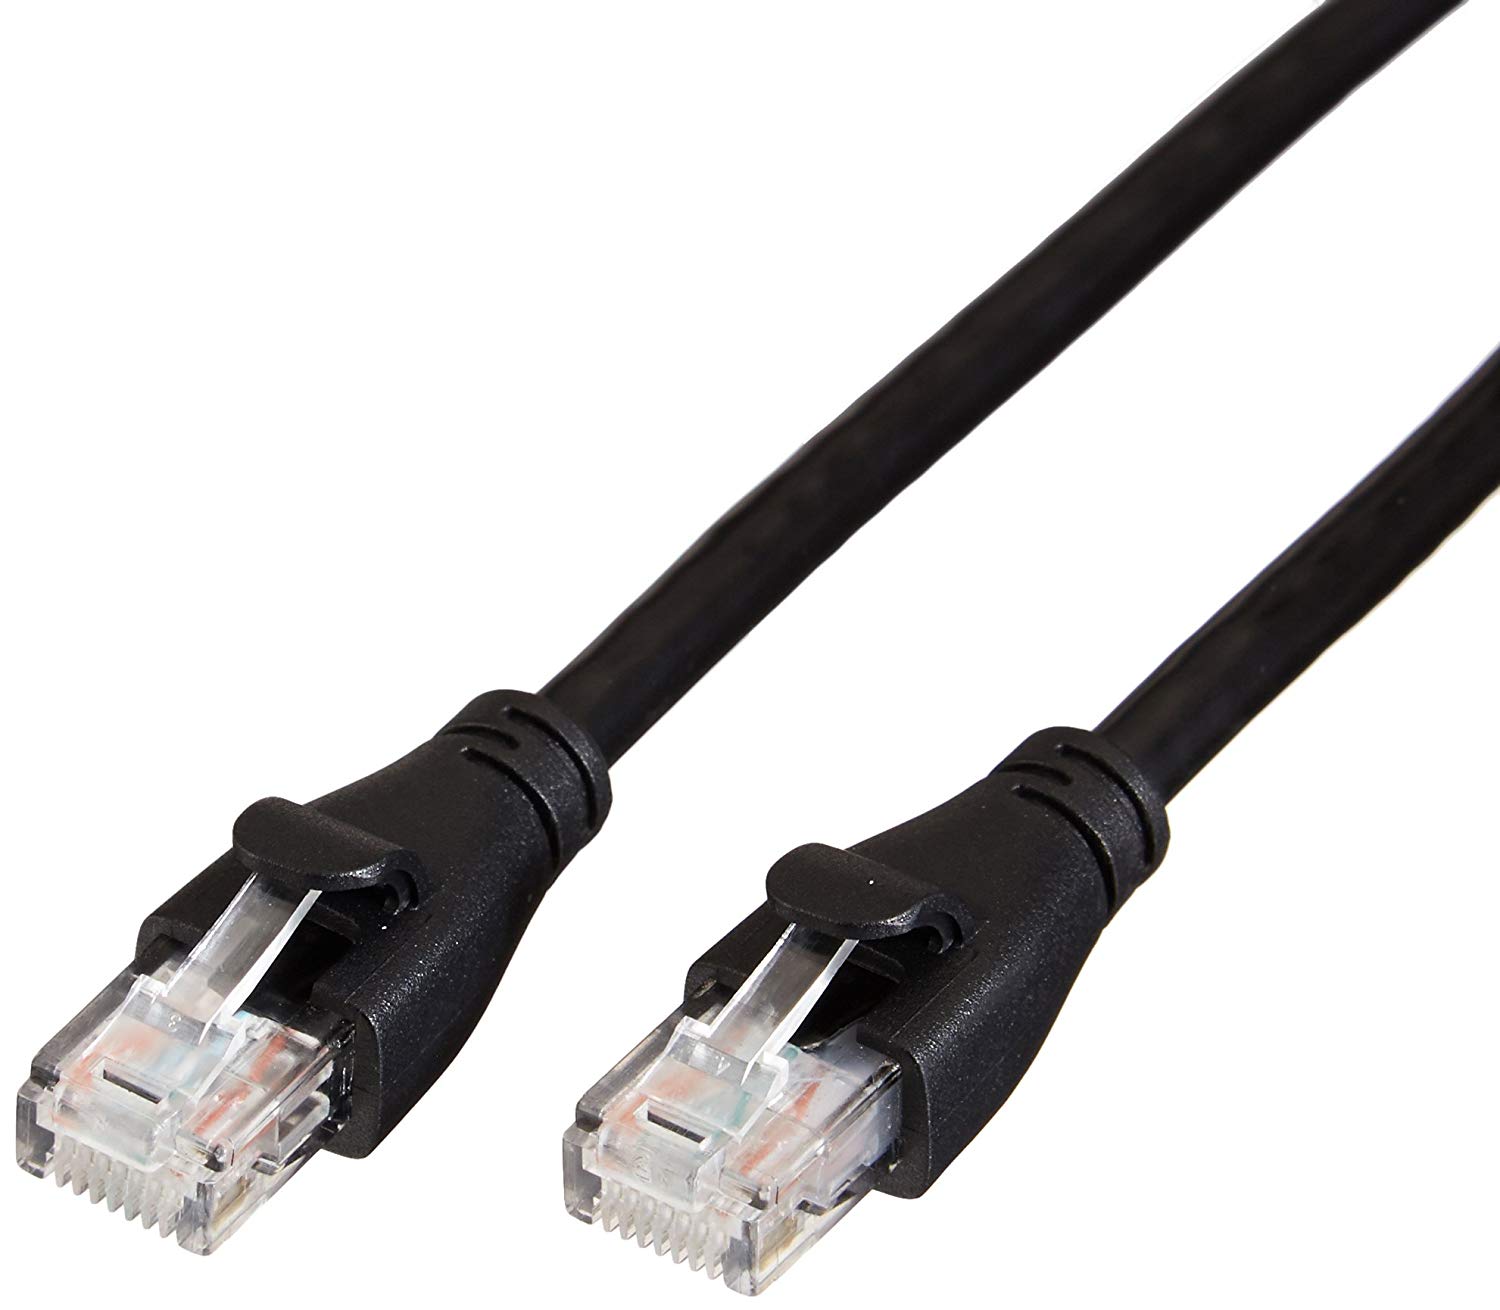 AmazonBasics RJ45 Cat-6 Ethernet Cable